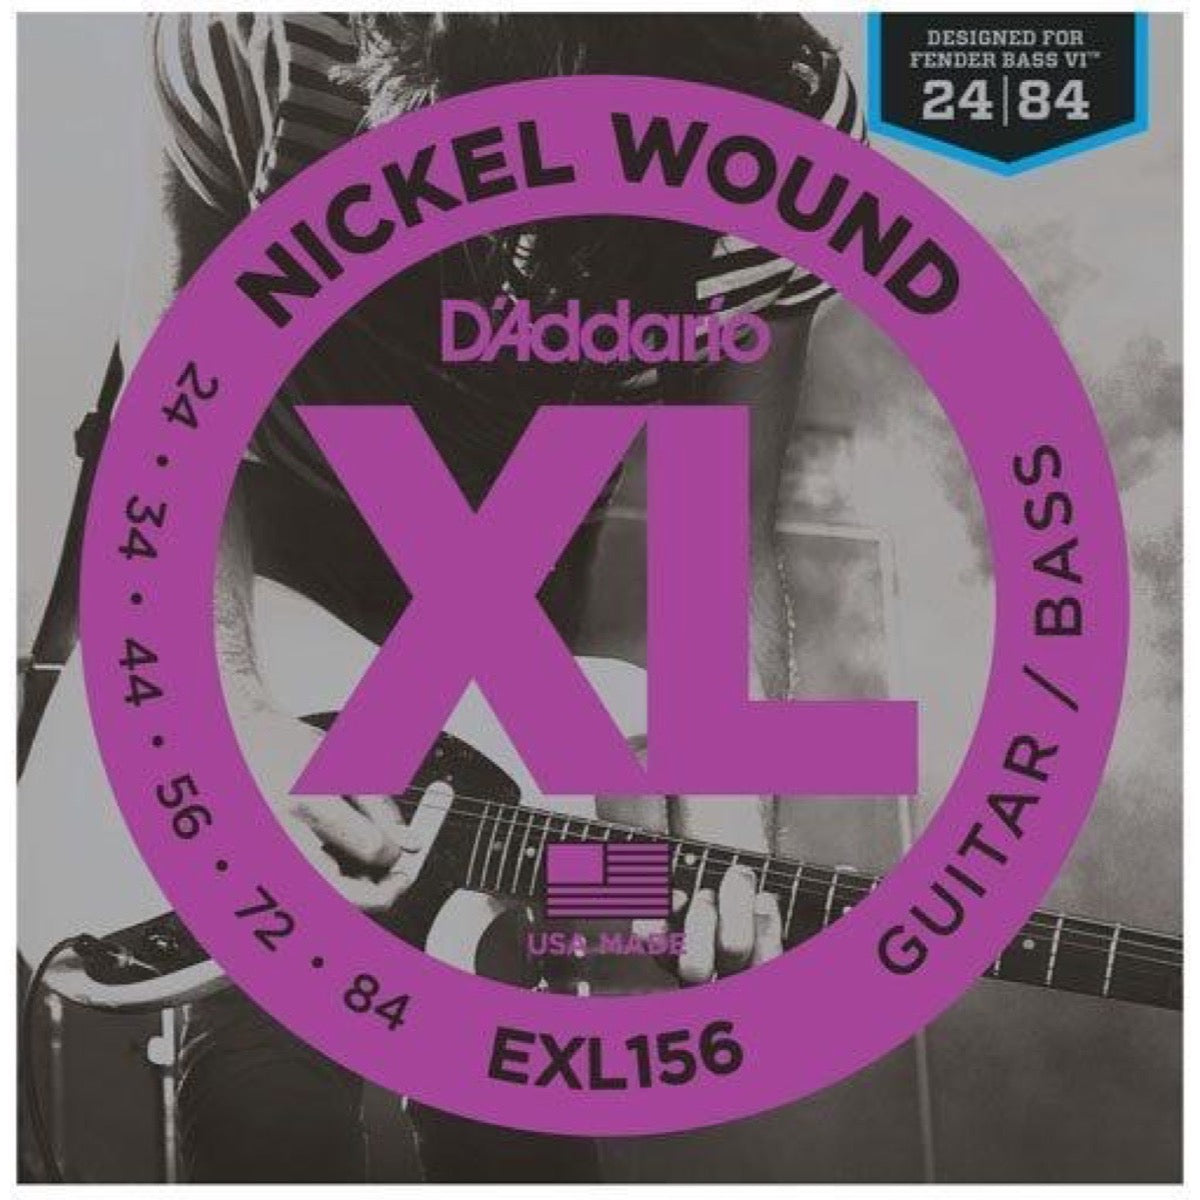 D'Addario EXL156 Nickel Wound Fender Bass VI Strings, EXL156, 24-84